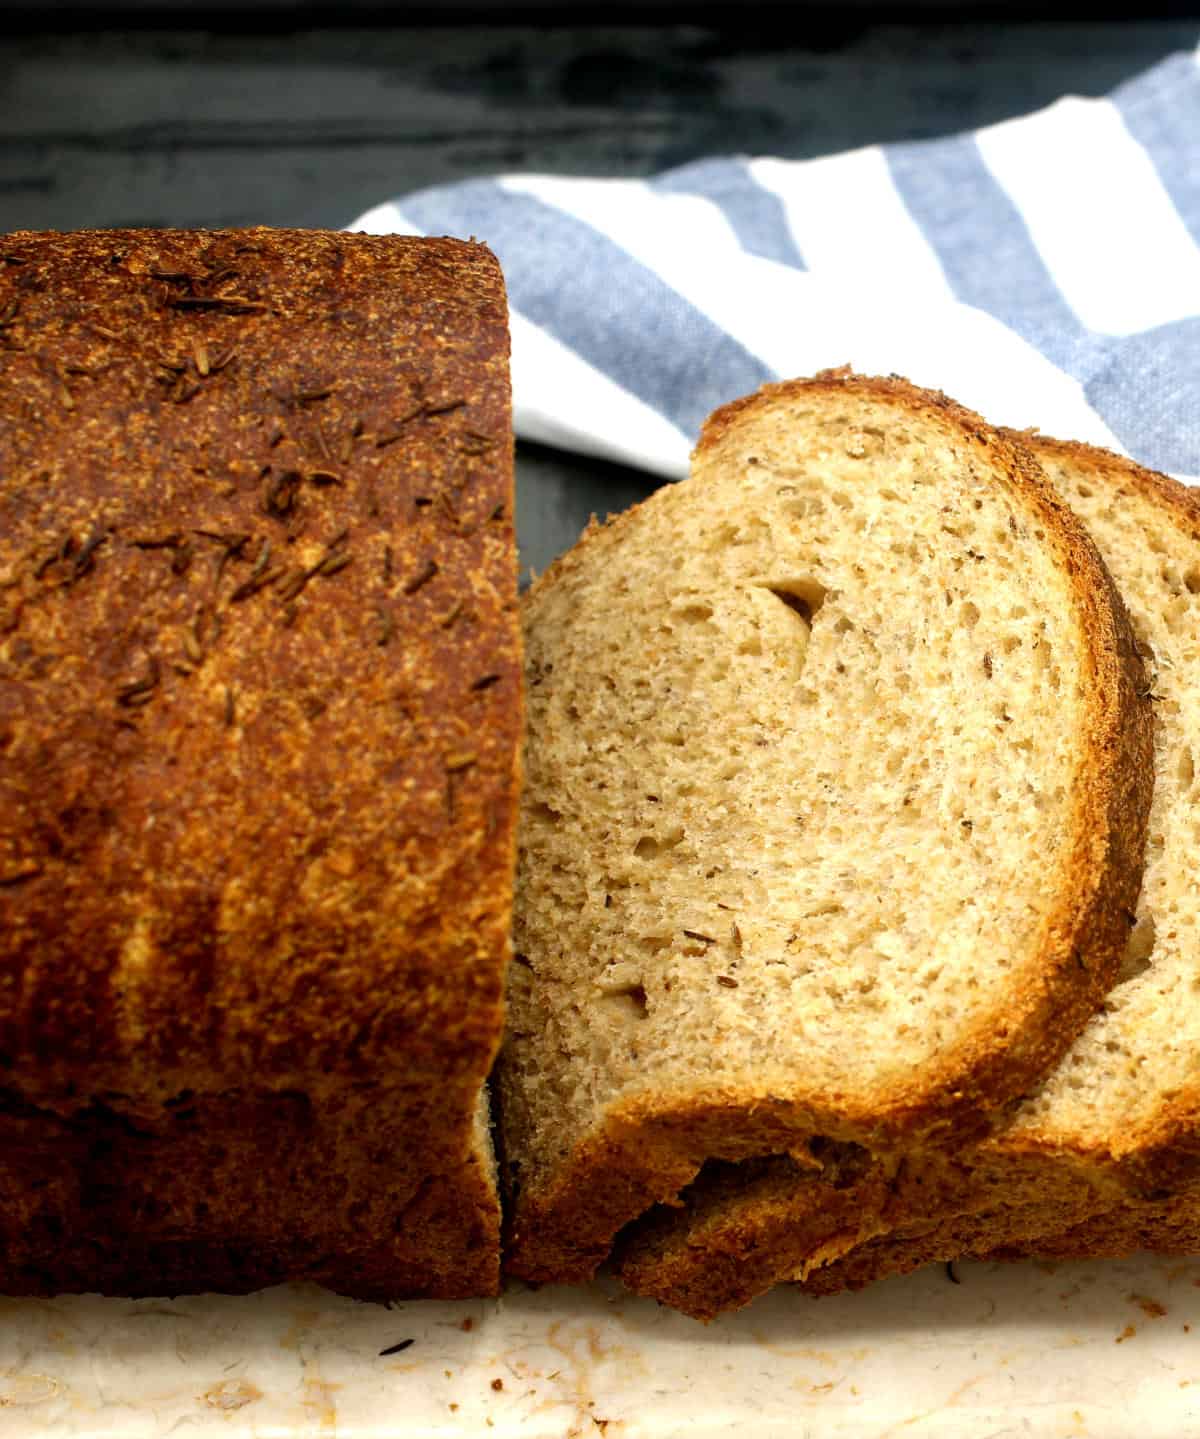 A sliced loaf of rye bread.